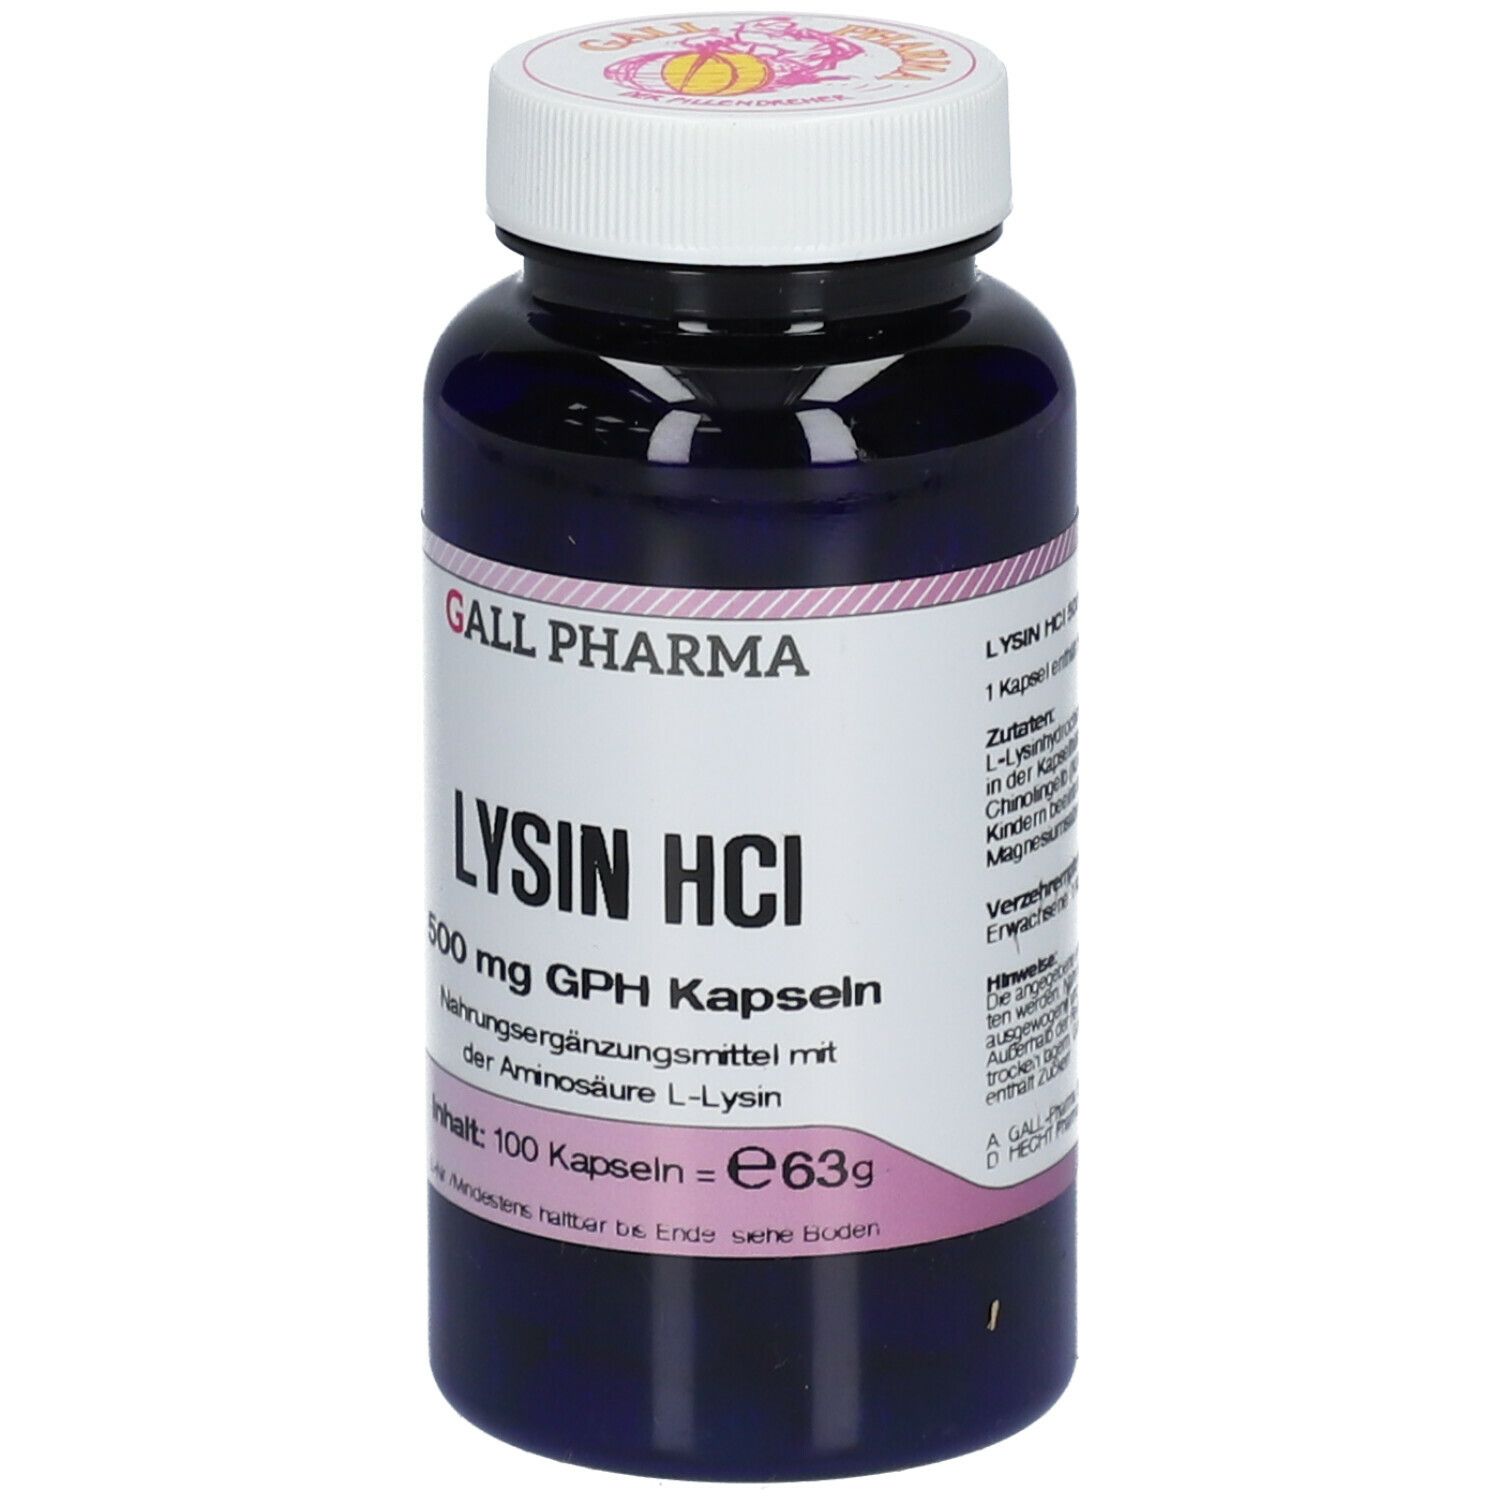 GALL PHARMA Lysin HCl 500 mg GPH Kapseln